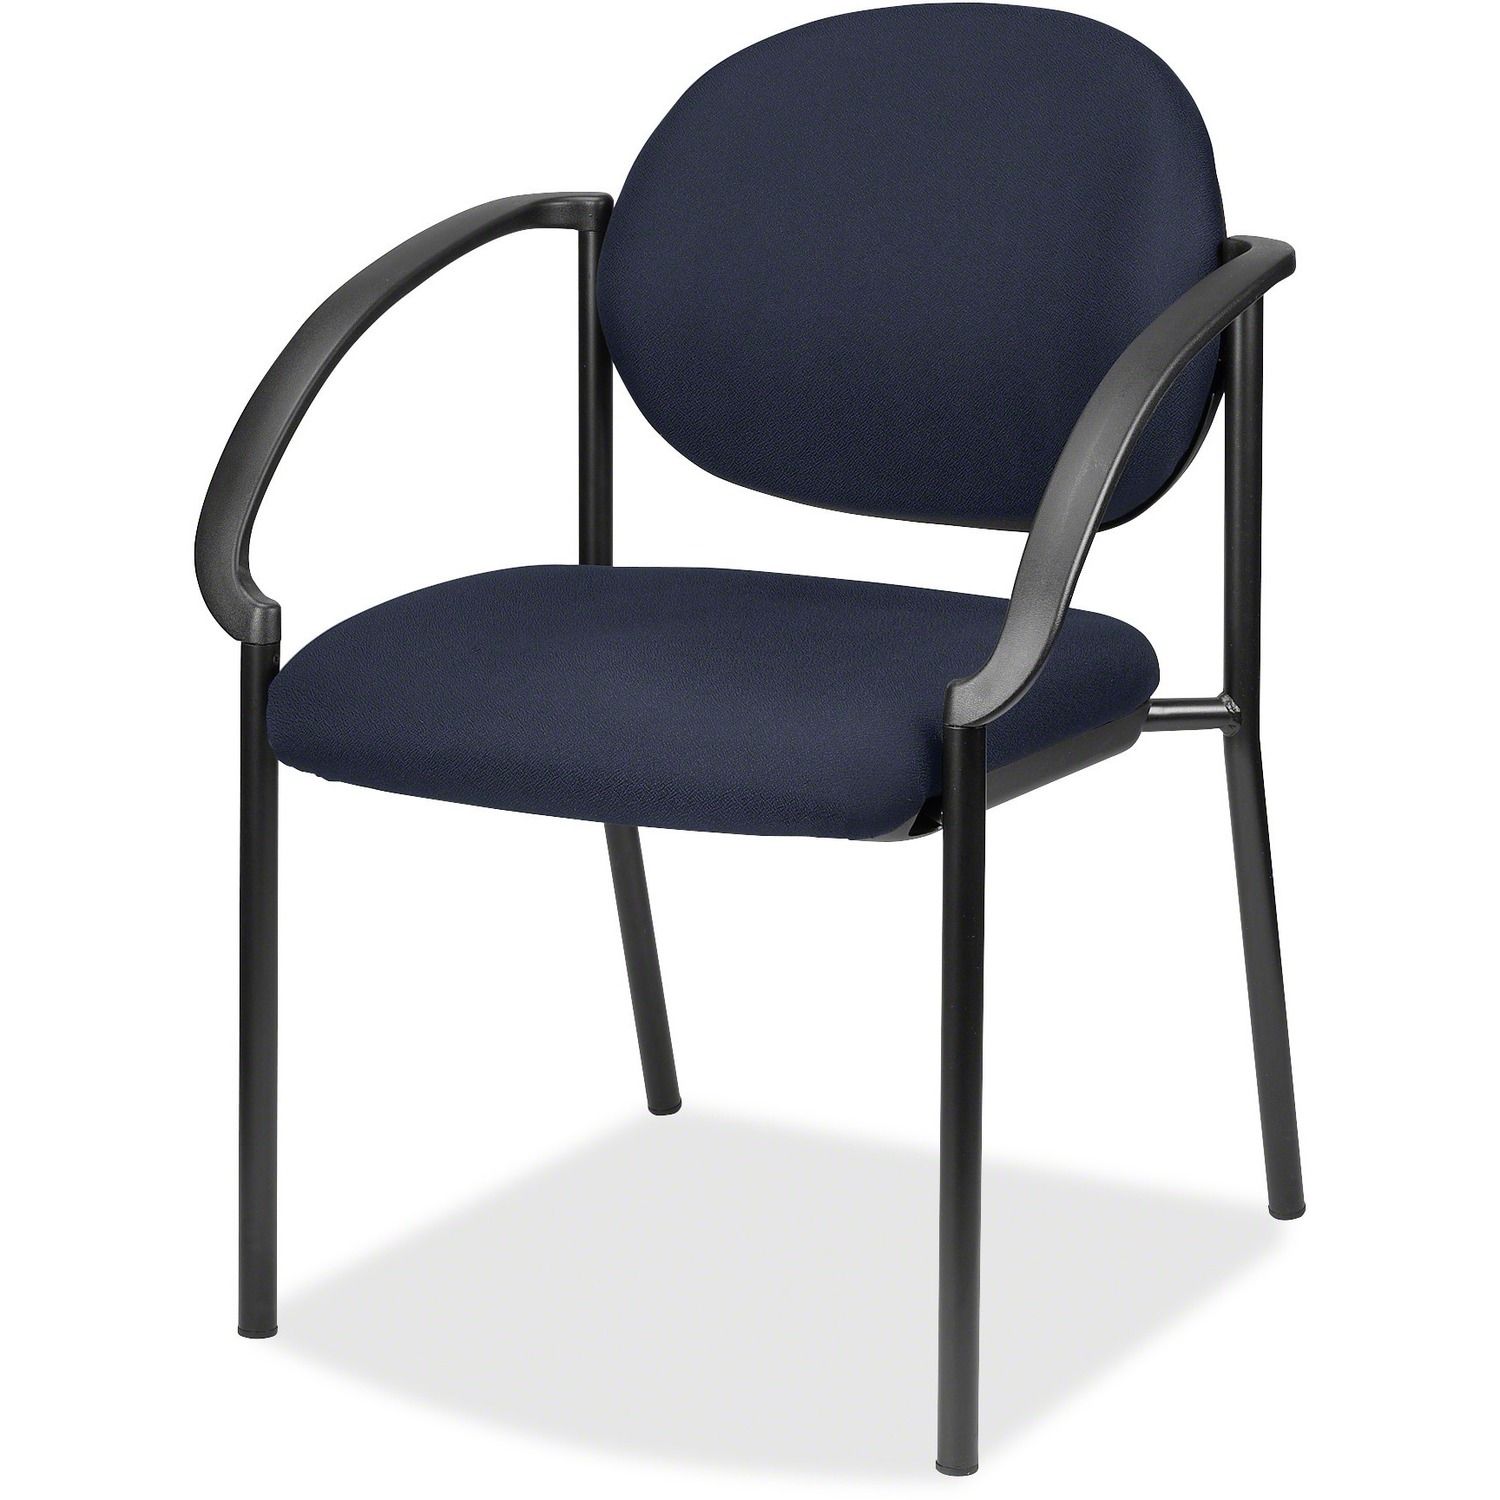 Dakota 9011 Stacking Chair Periwinkle Fabric Seat, Periwinkle Fabric Back, Steel Frame, Four-legged Base, 1 Each